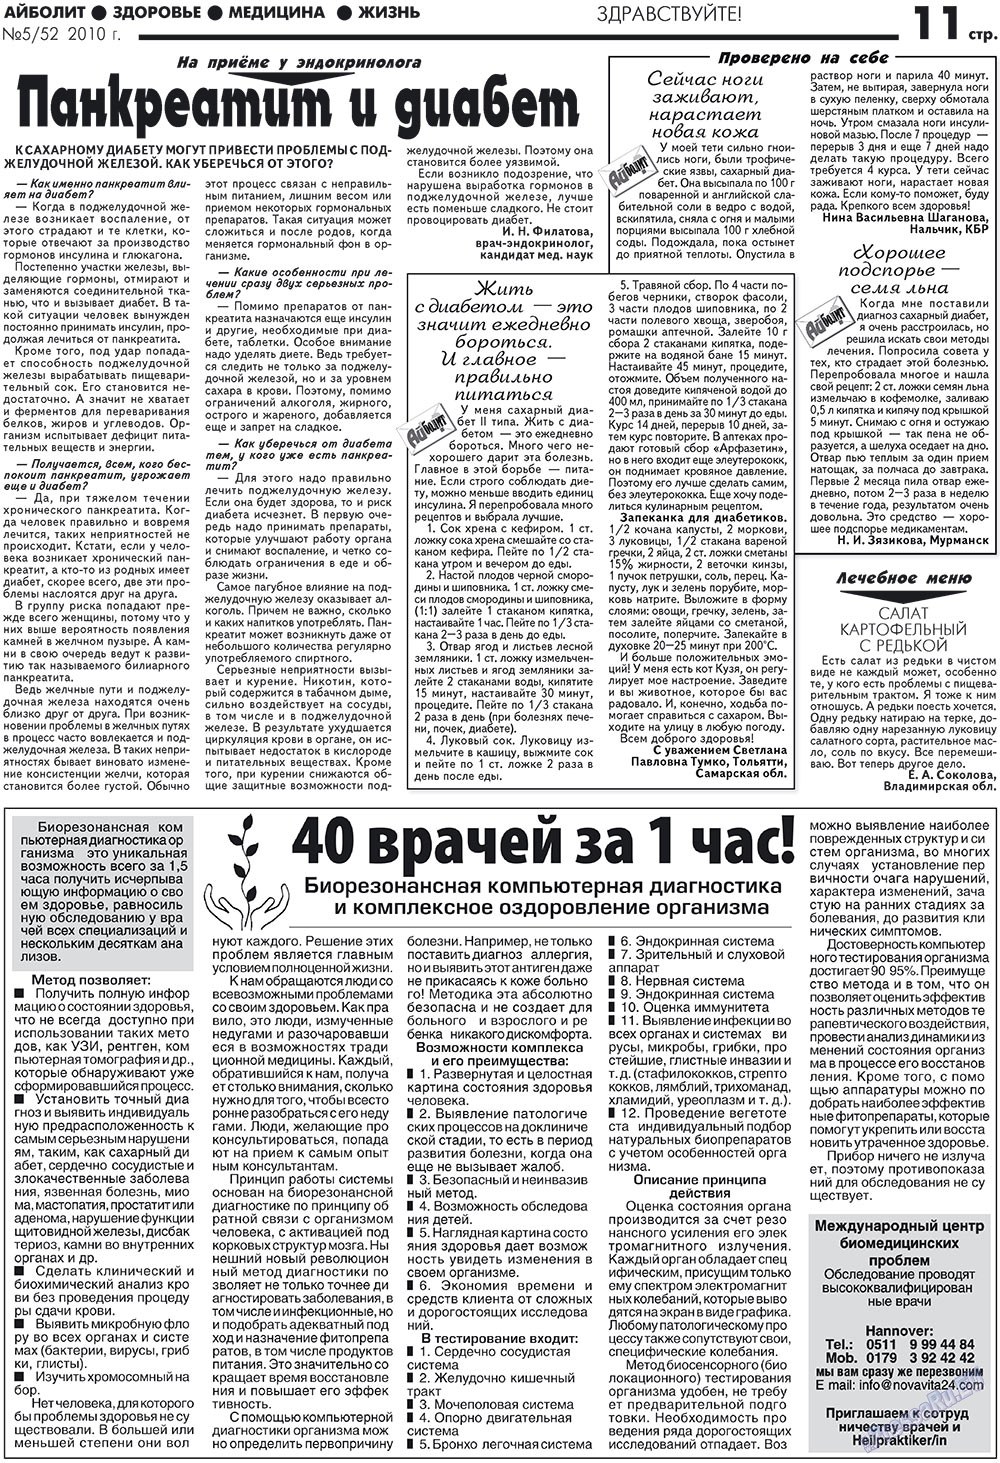 АйБолит (газета). 2010 год, номер 5, стр. 11